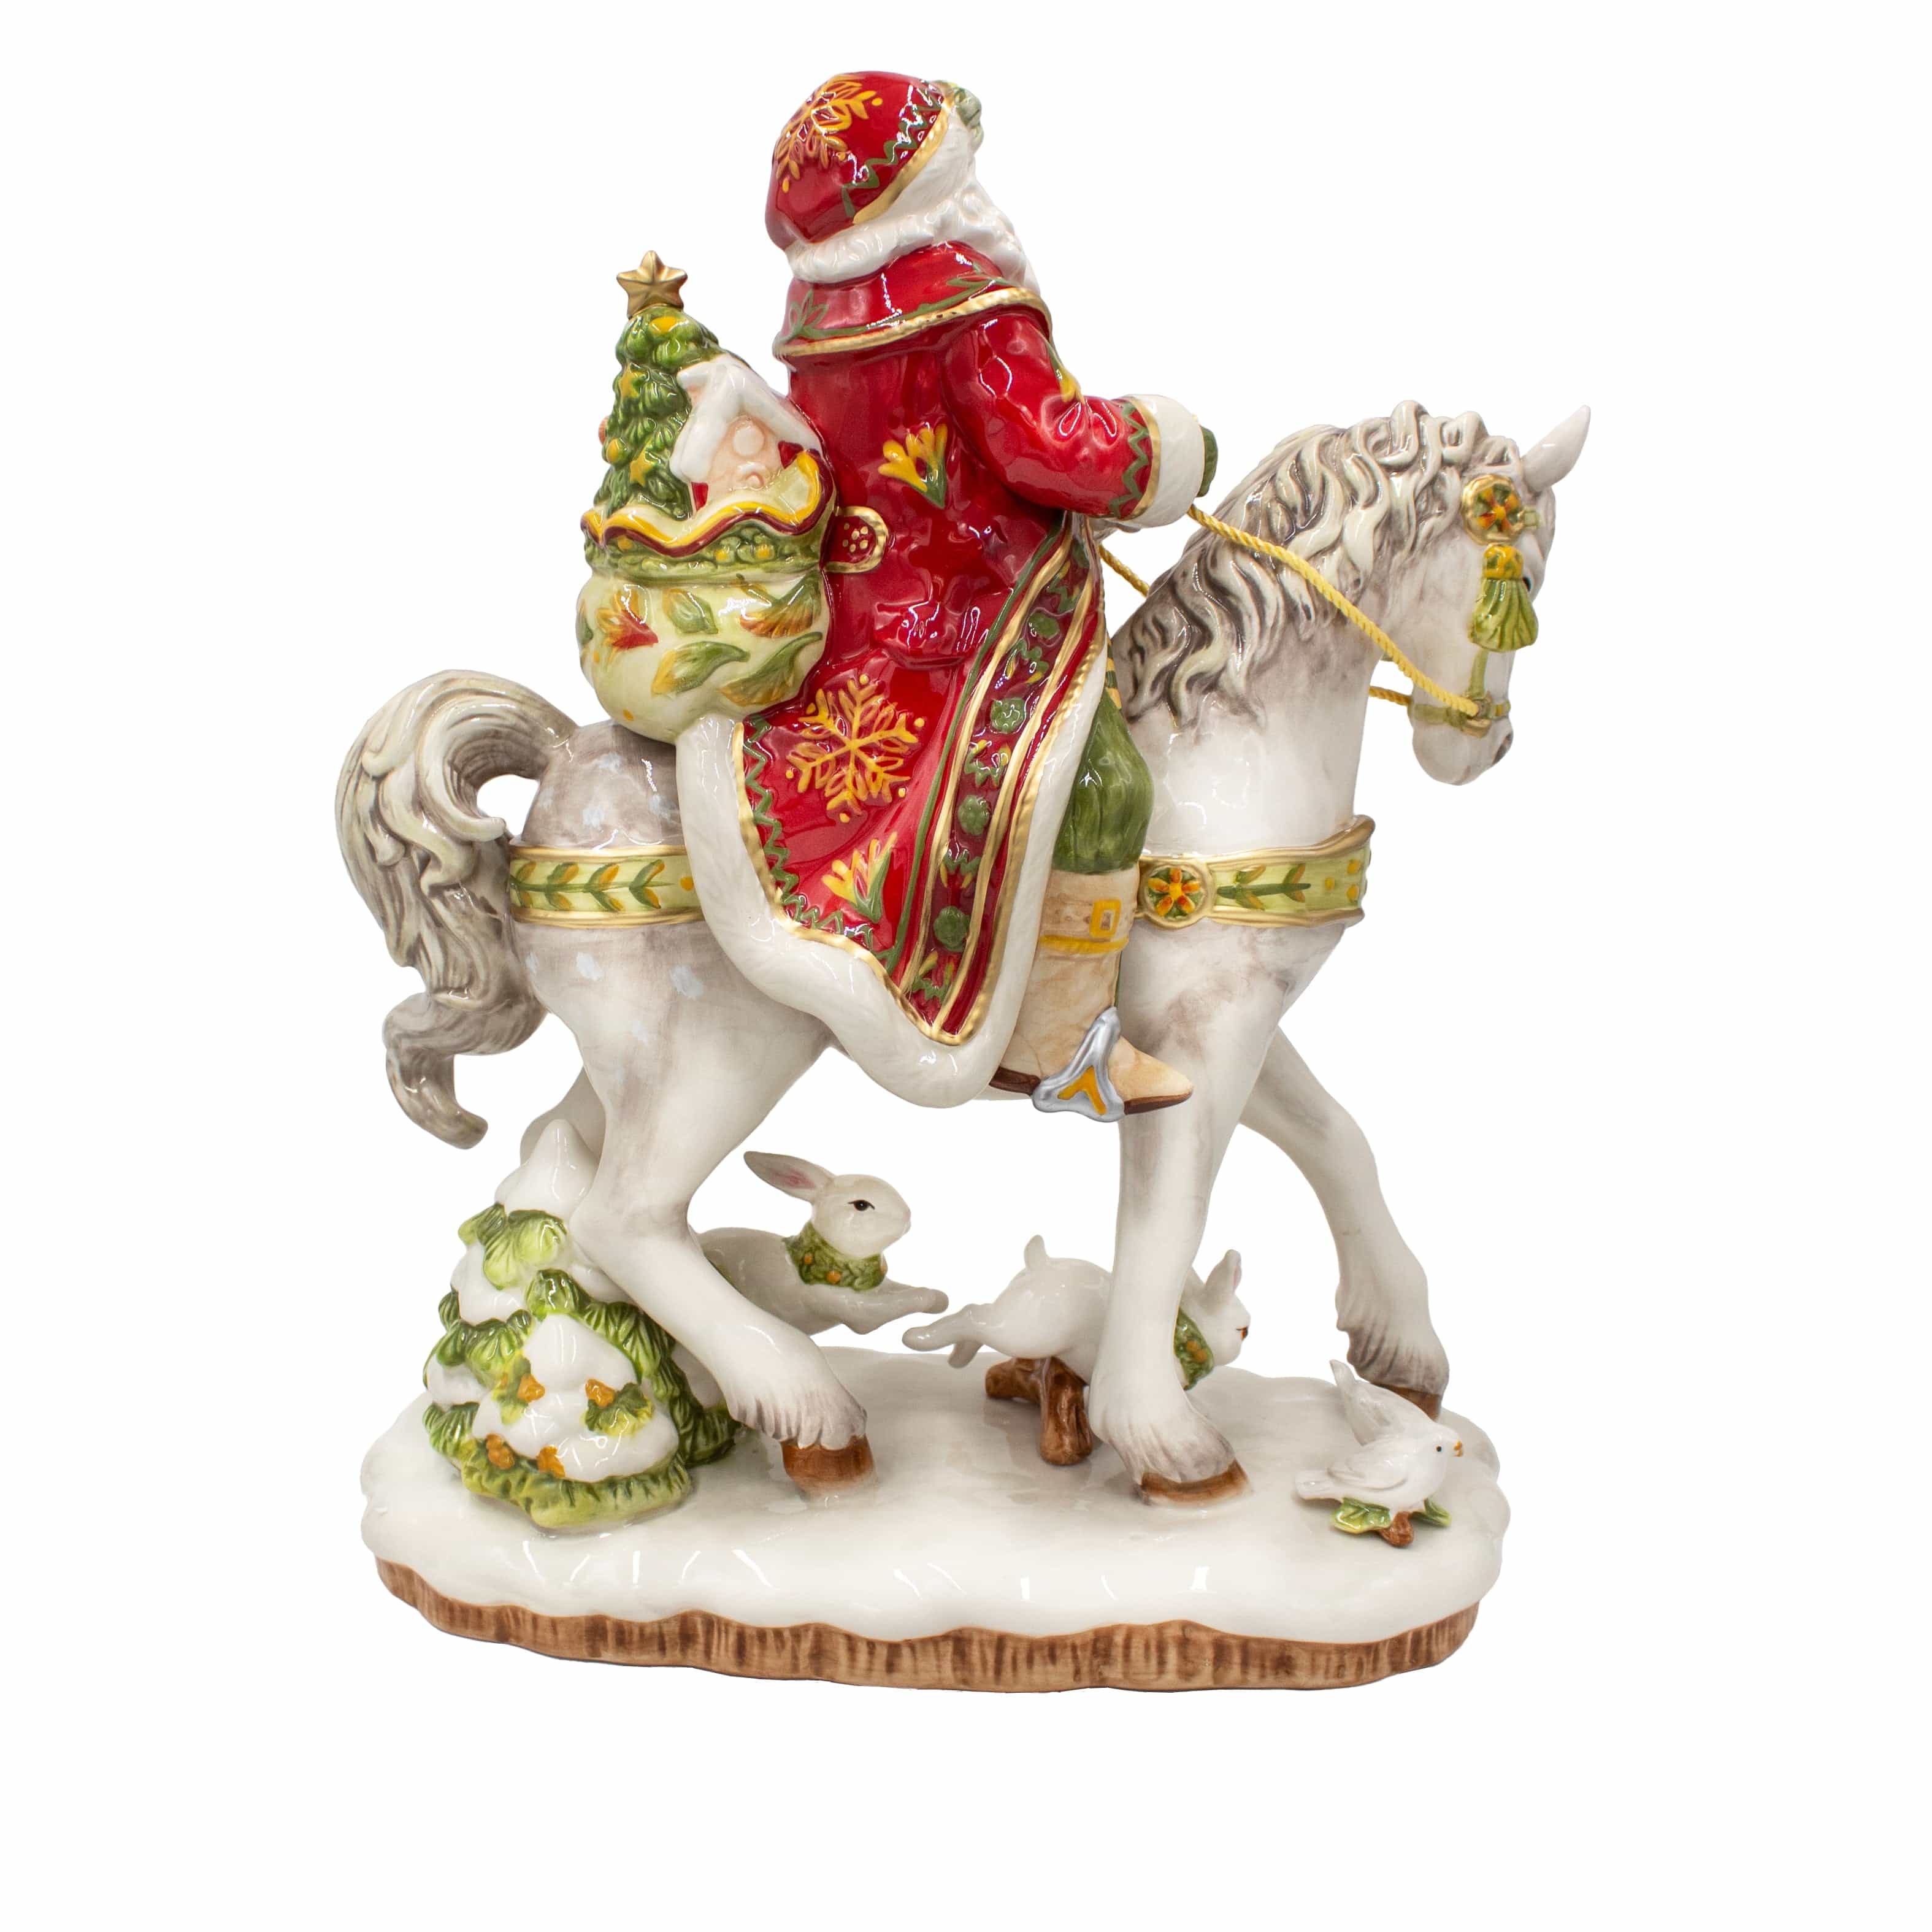 Damask Holiday Santa On Horse Figurine, 16 IN